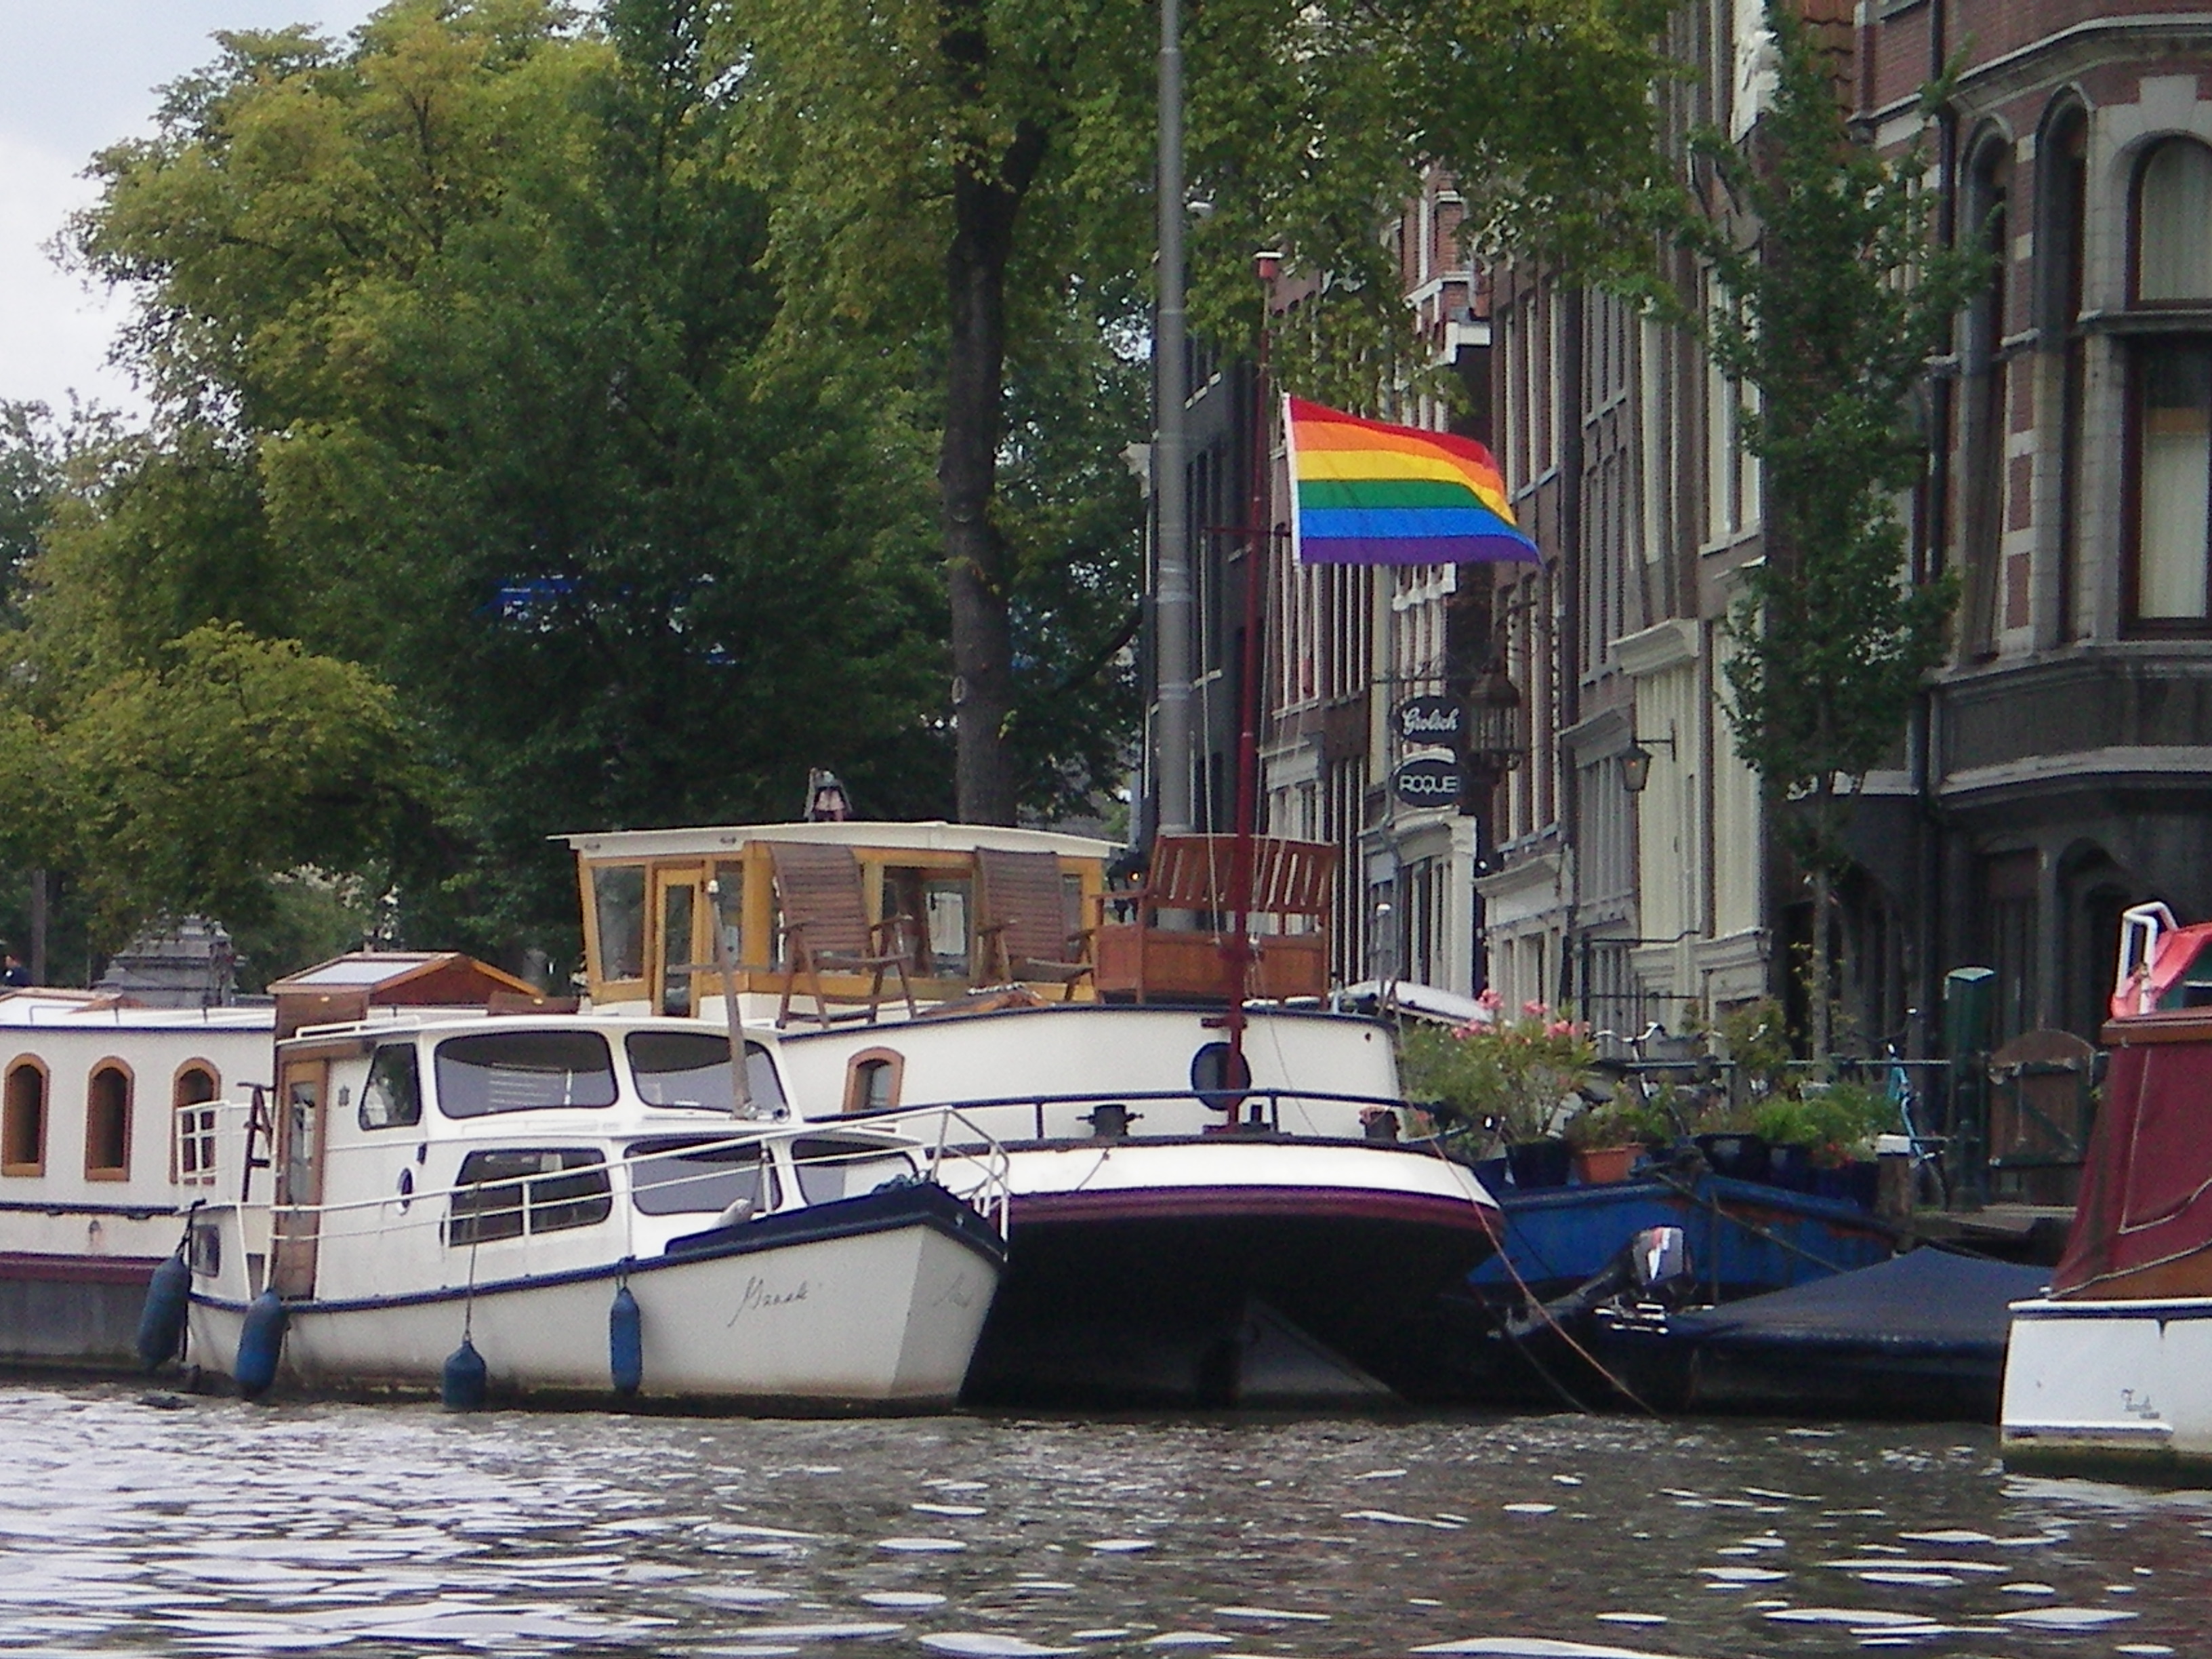 Rainbow flag flies high in Amsterdam